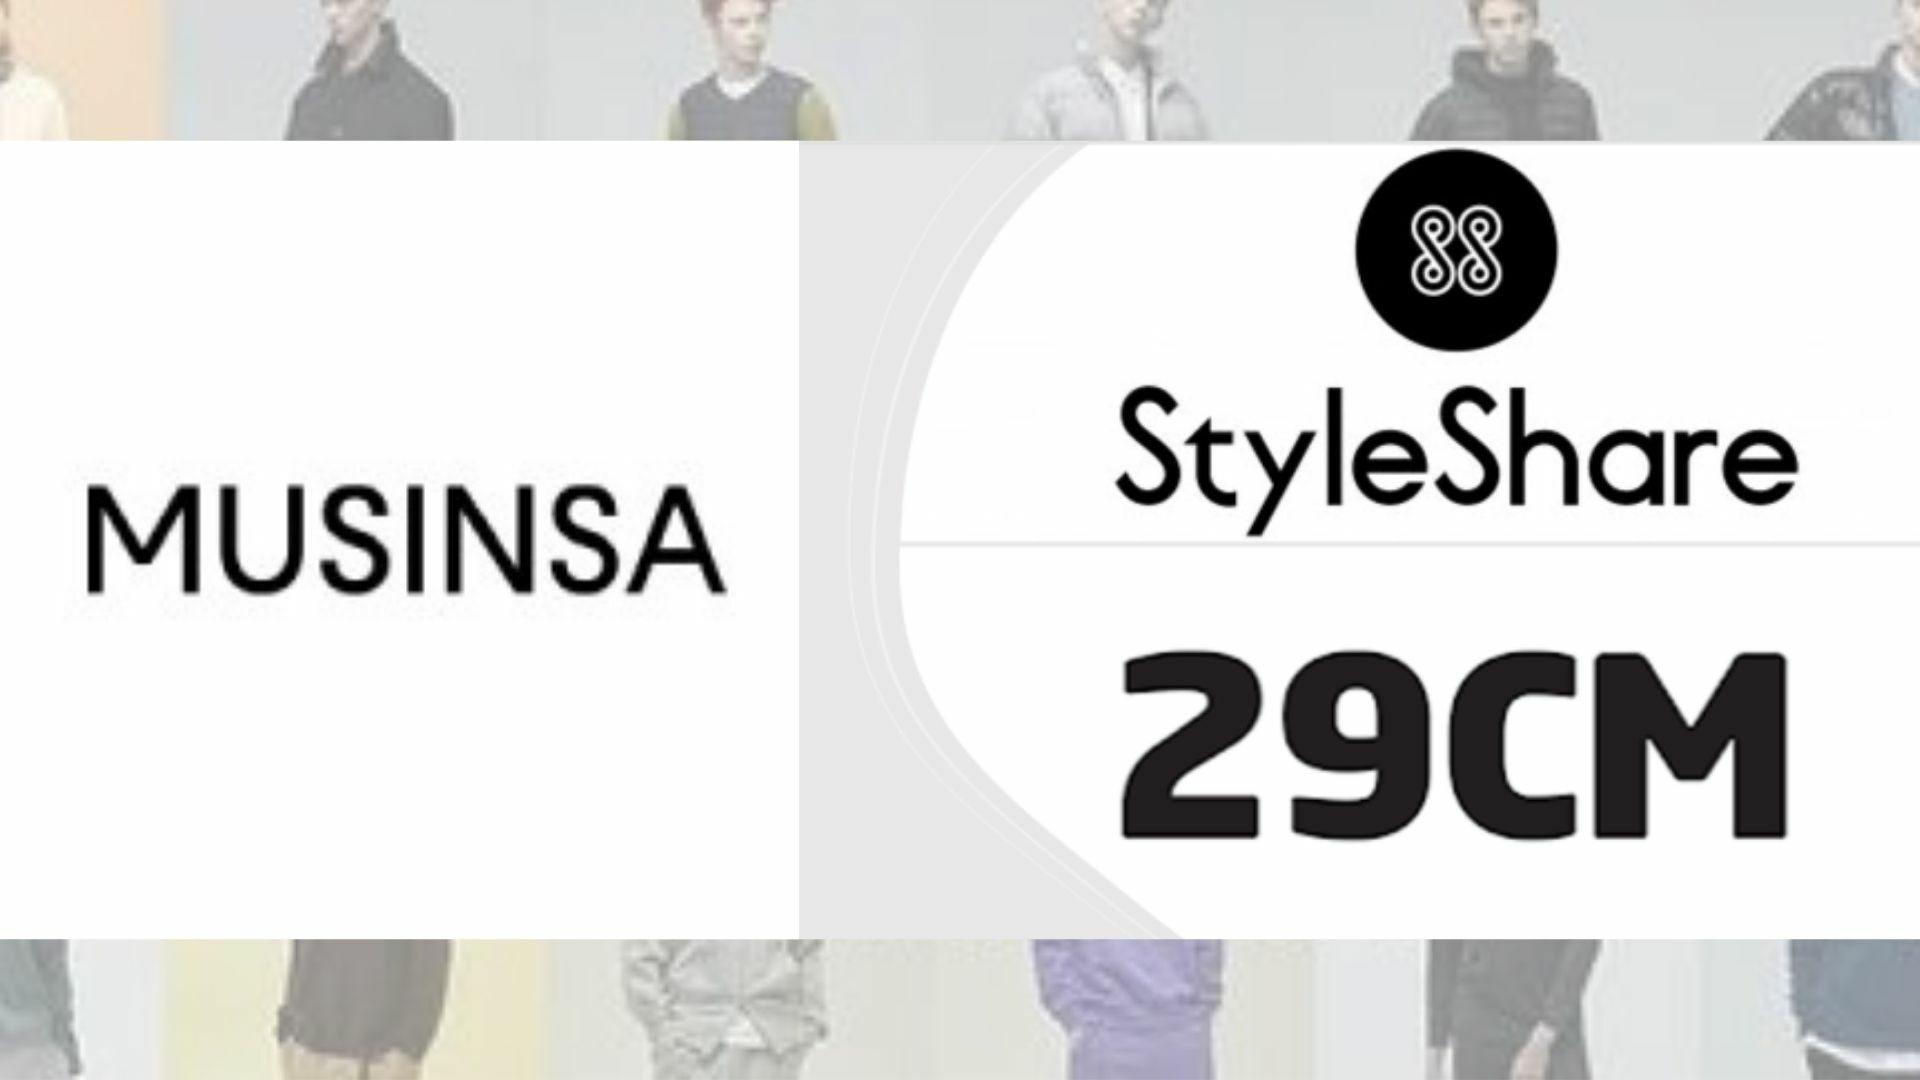 fashion unicorn startup musinsa acquires styleshare & 29cm